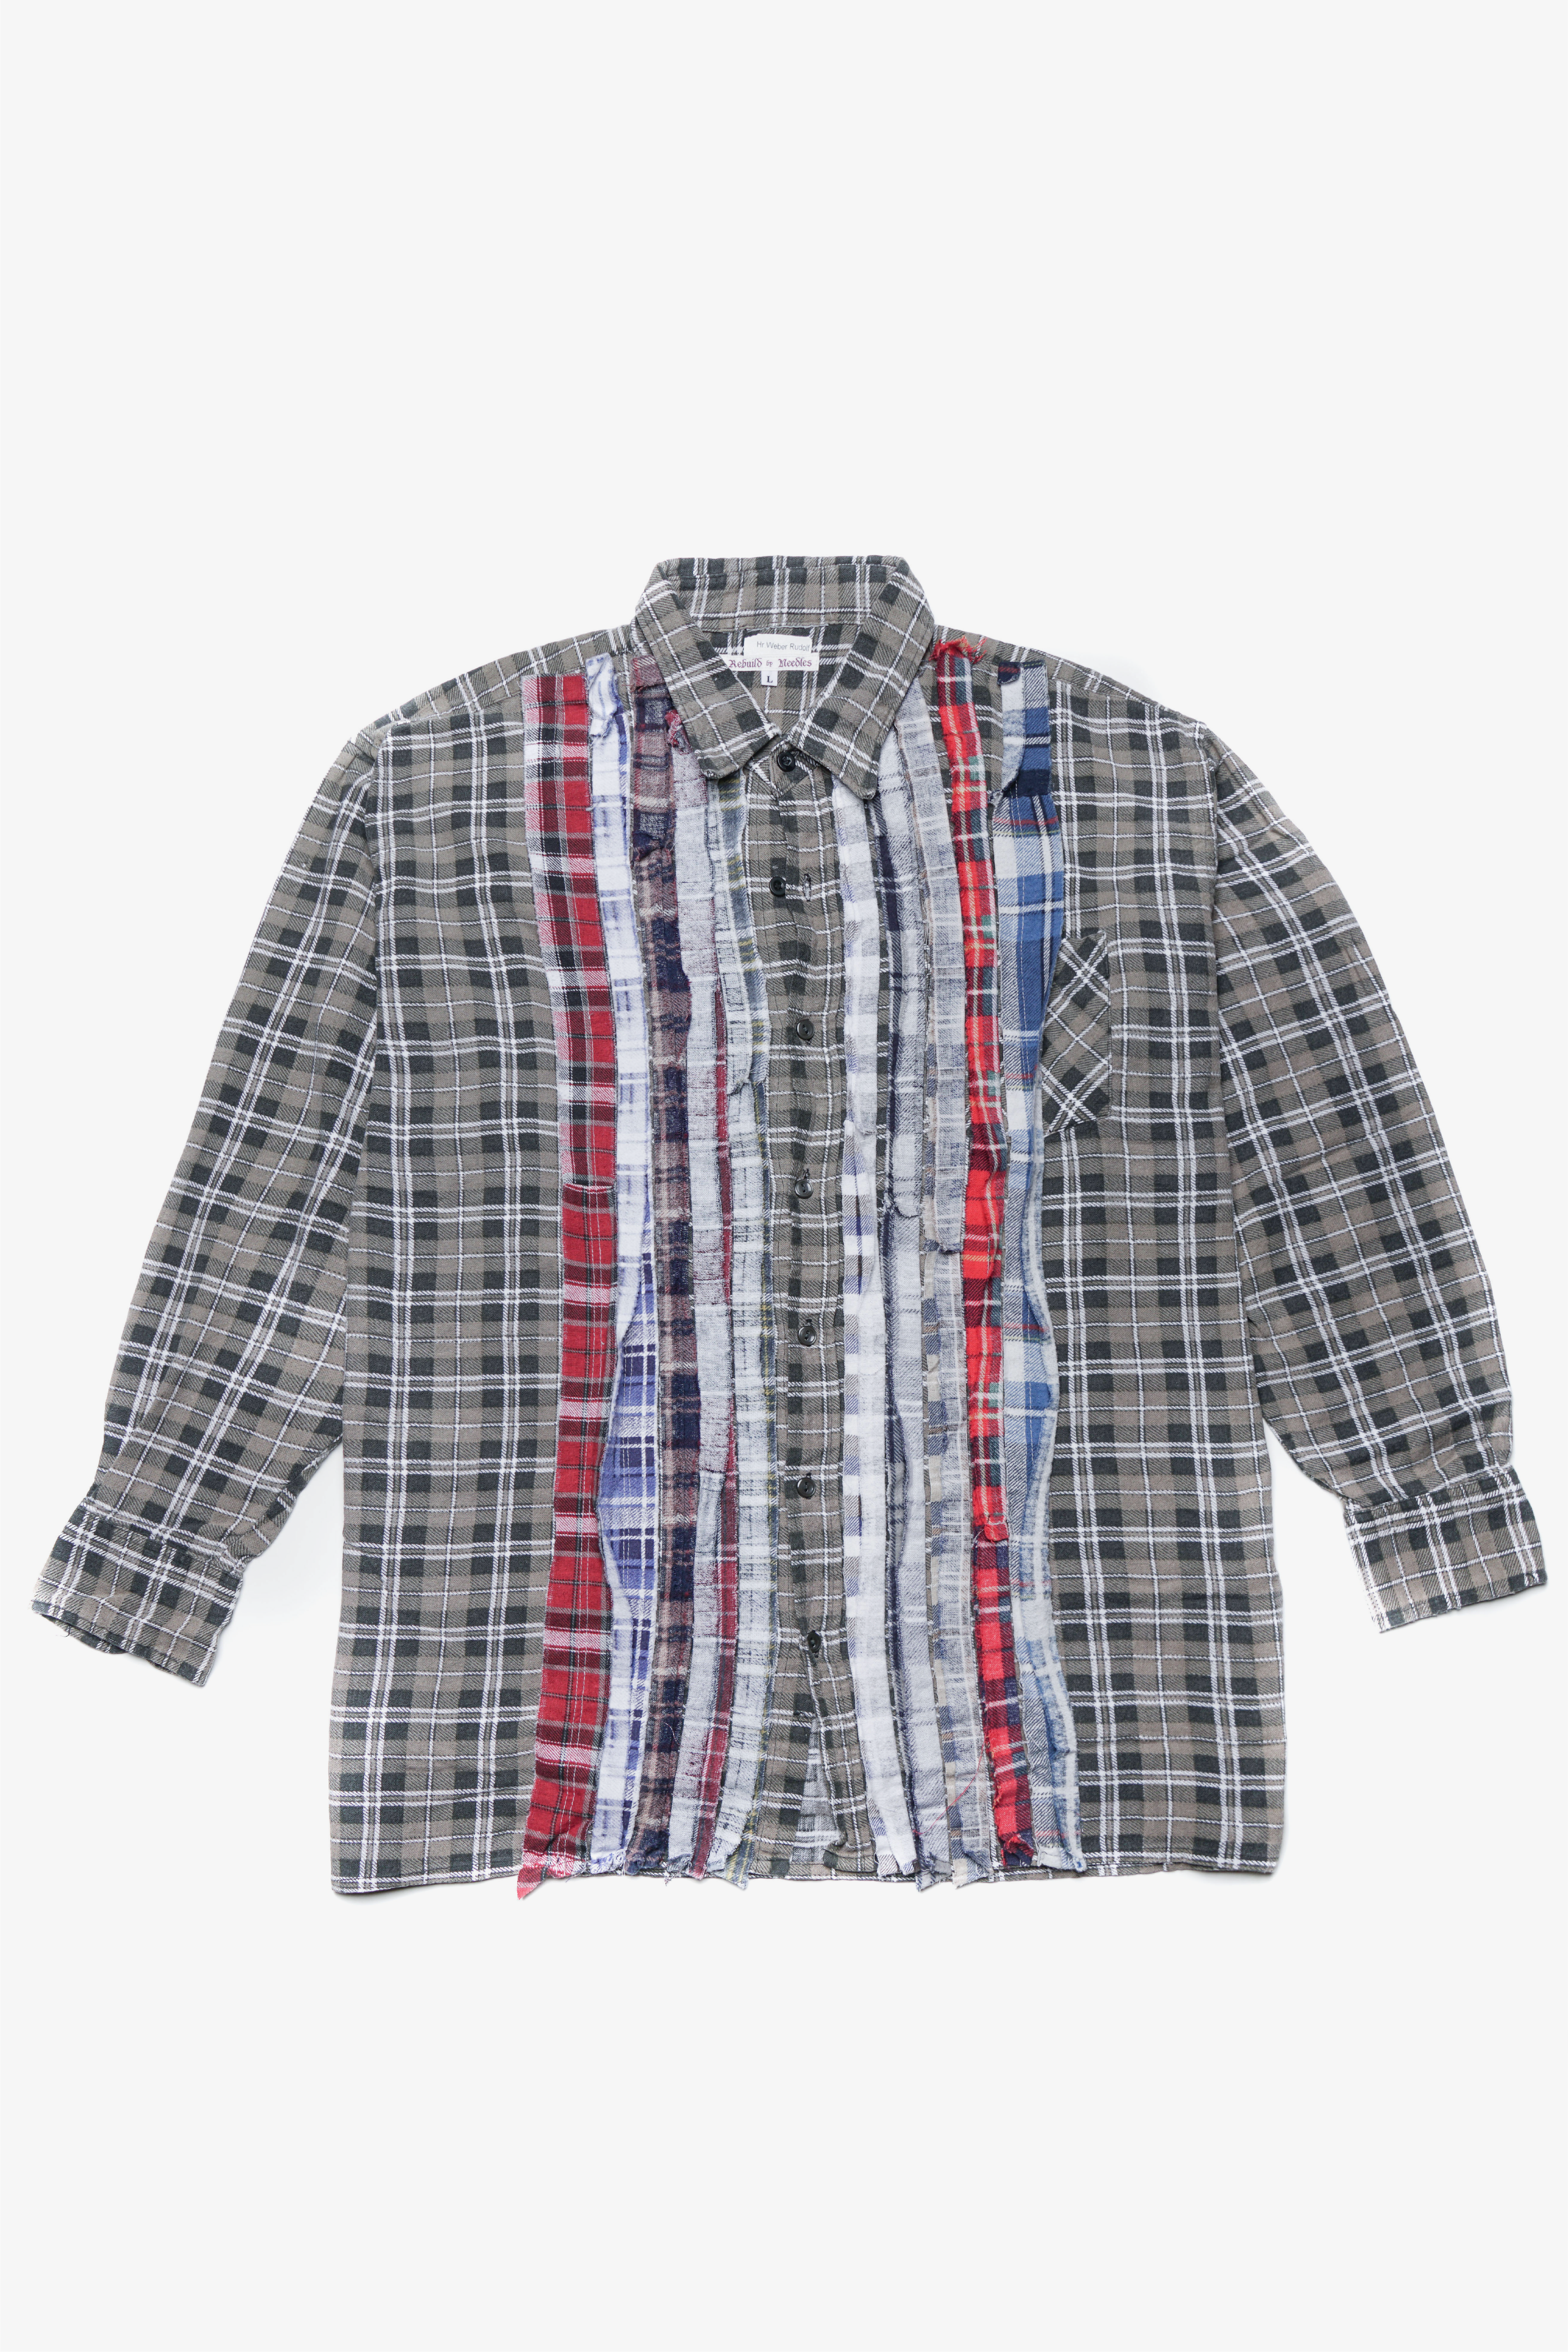 Selectshop FRAME - NEEDLES Flannel Ribbon Shirt Shirts Dubai